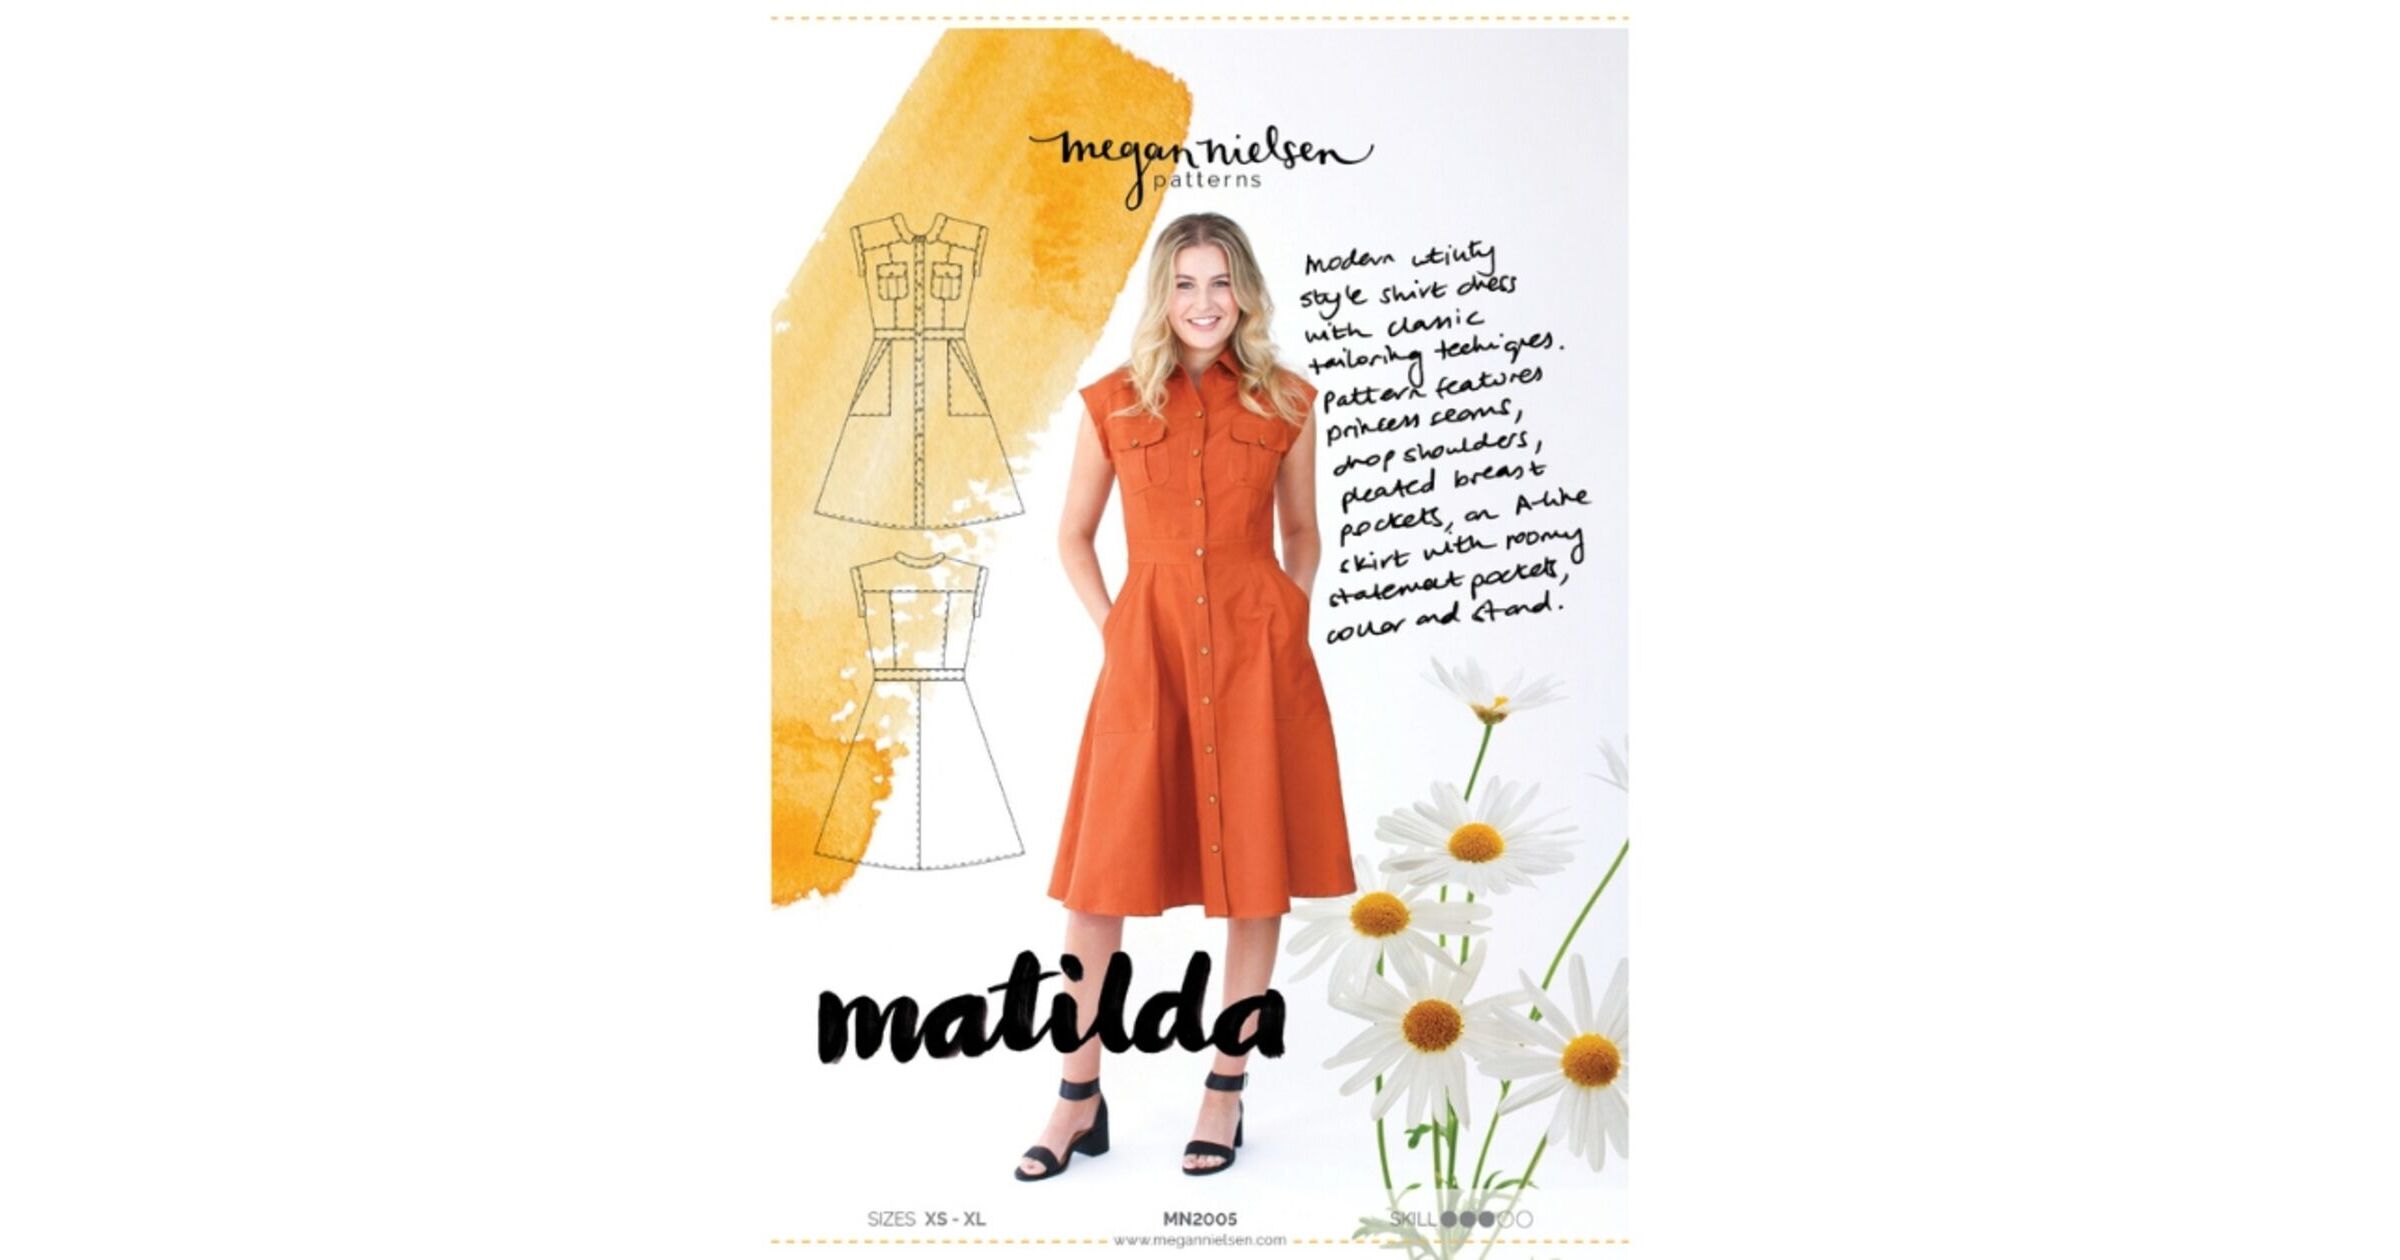 Introducing Matilda  Megan Nielsen Patterns Blog